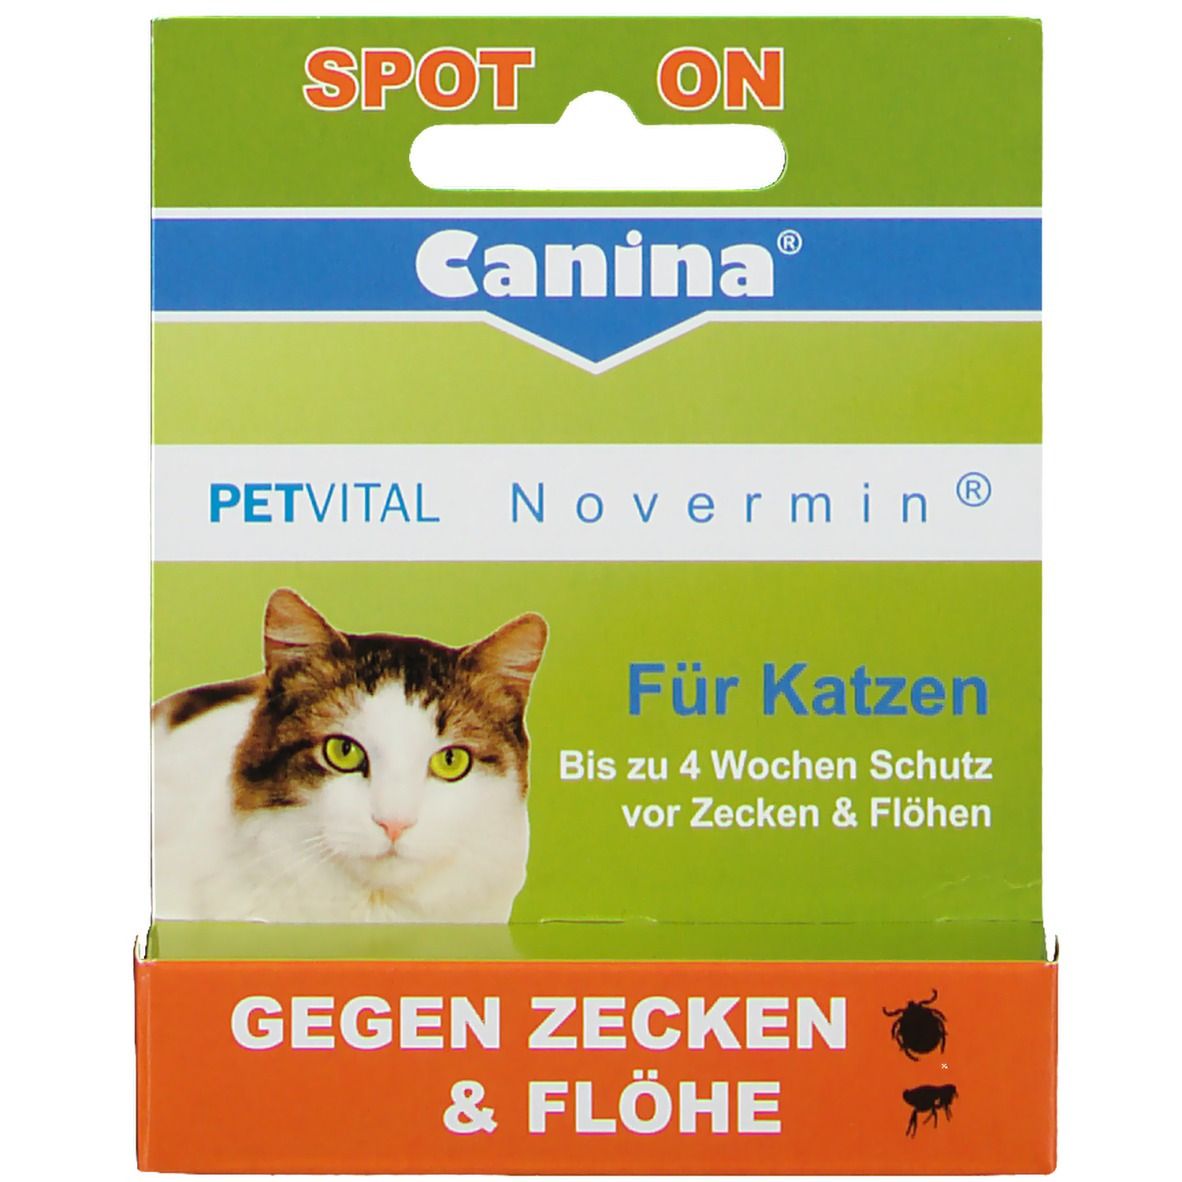 Canina® PETVITAL Novermin® für Katzen